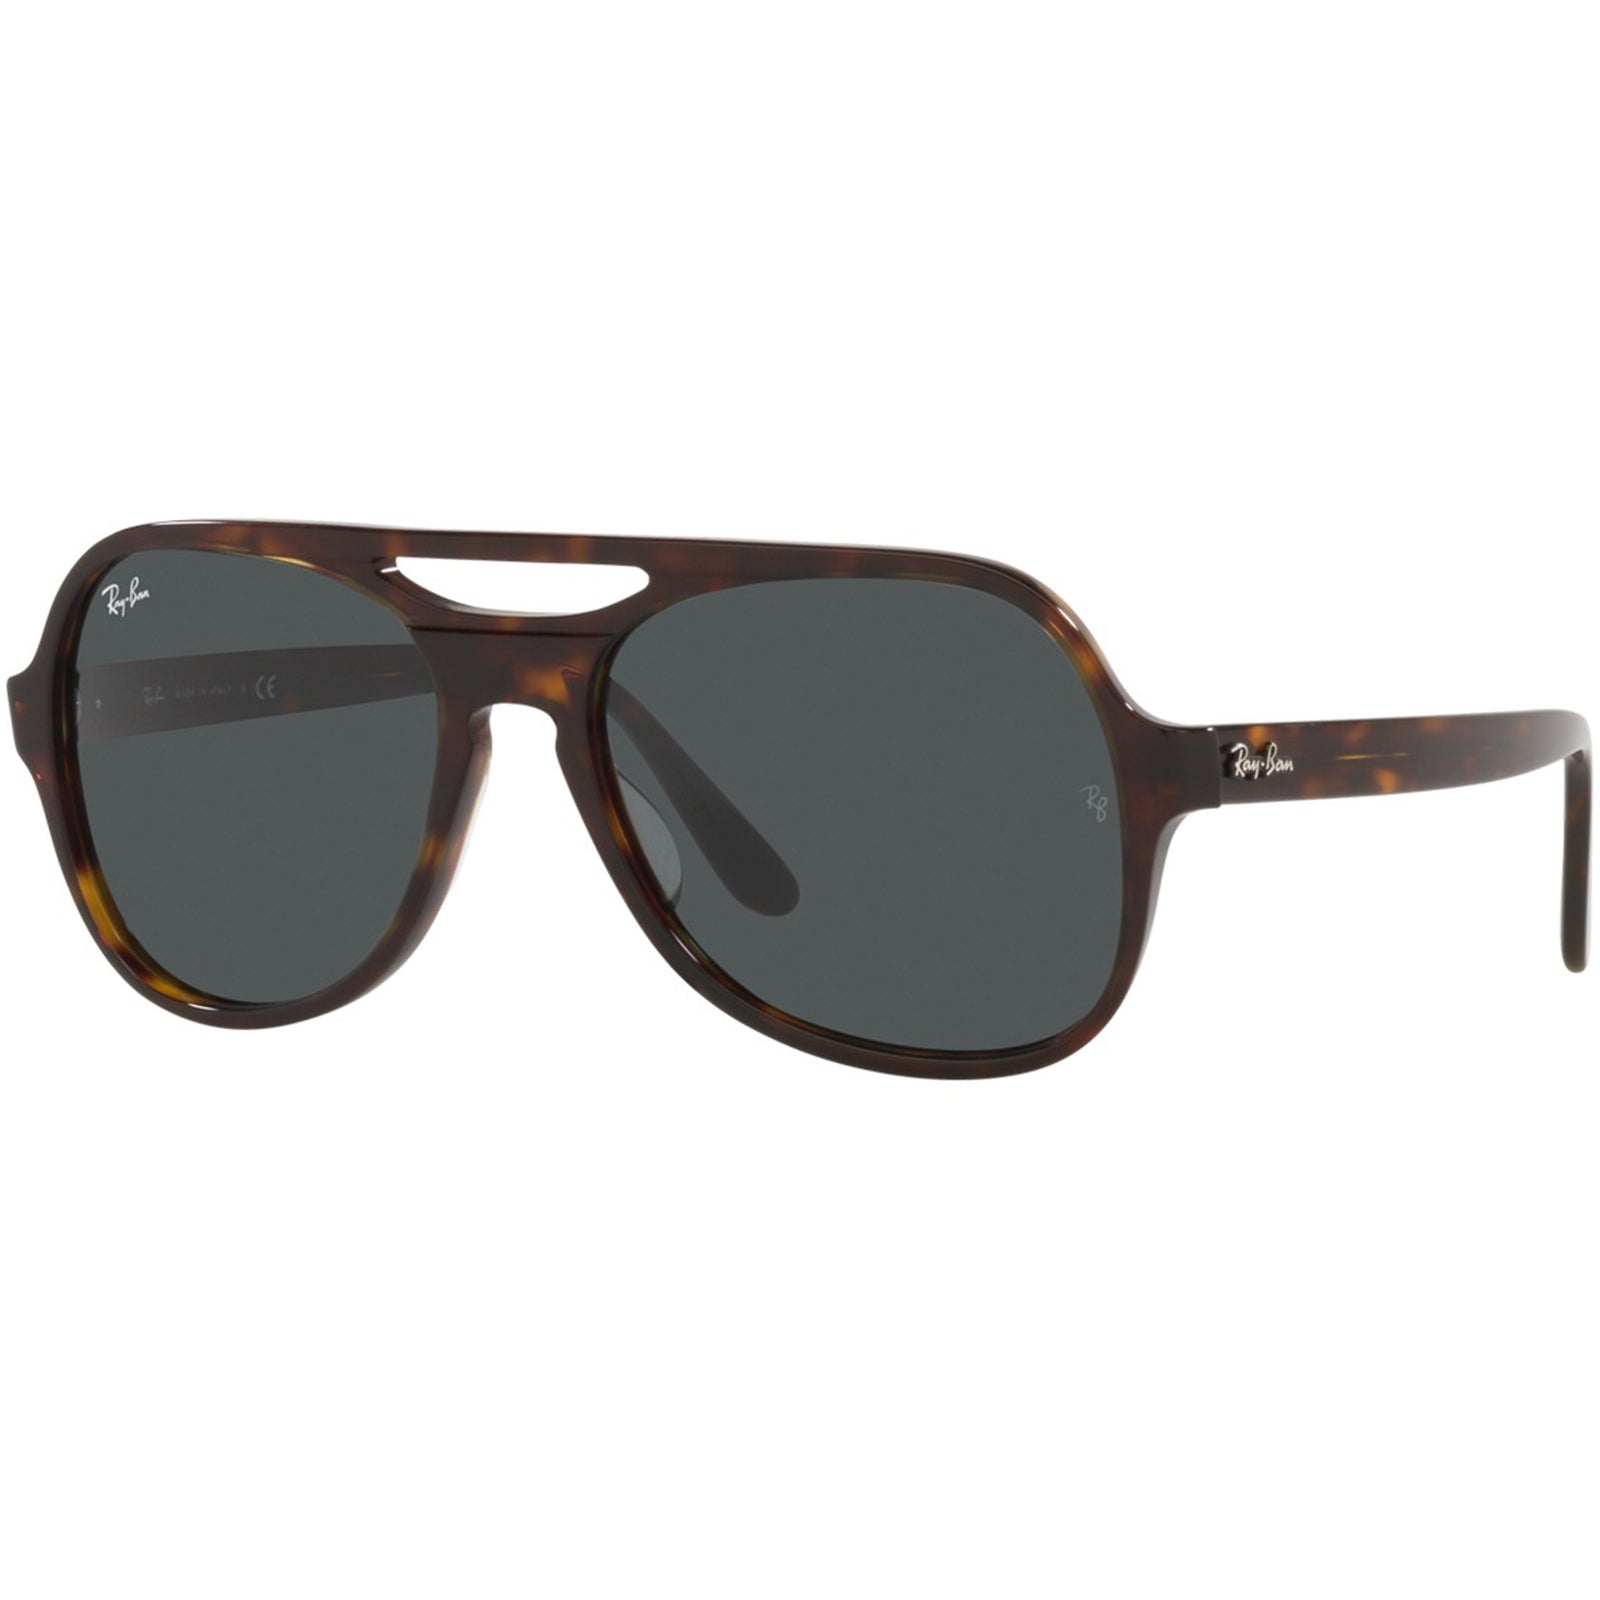 Ray-Ban Powderhorn Adult Aviator Sunglasses-0RB4357